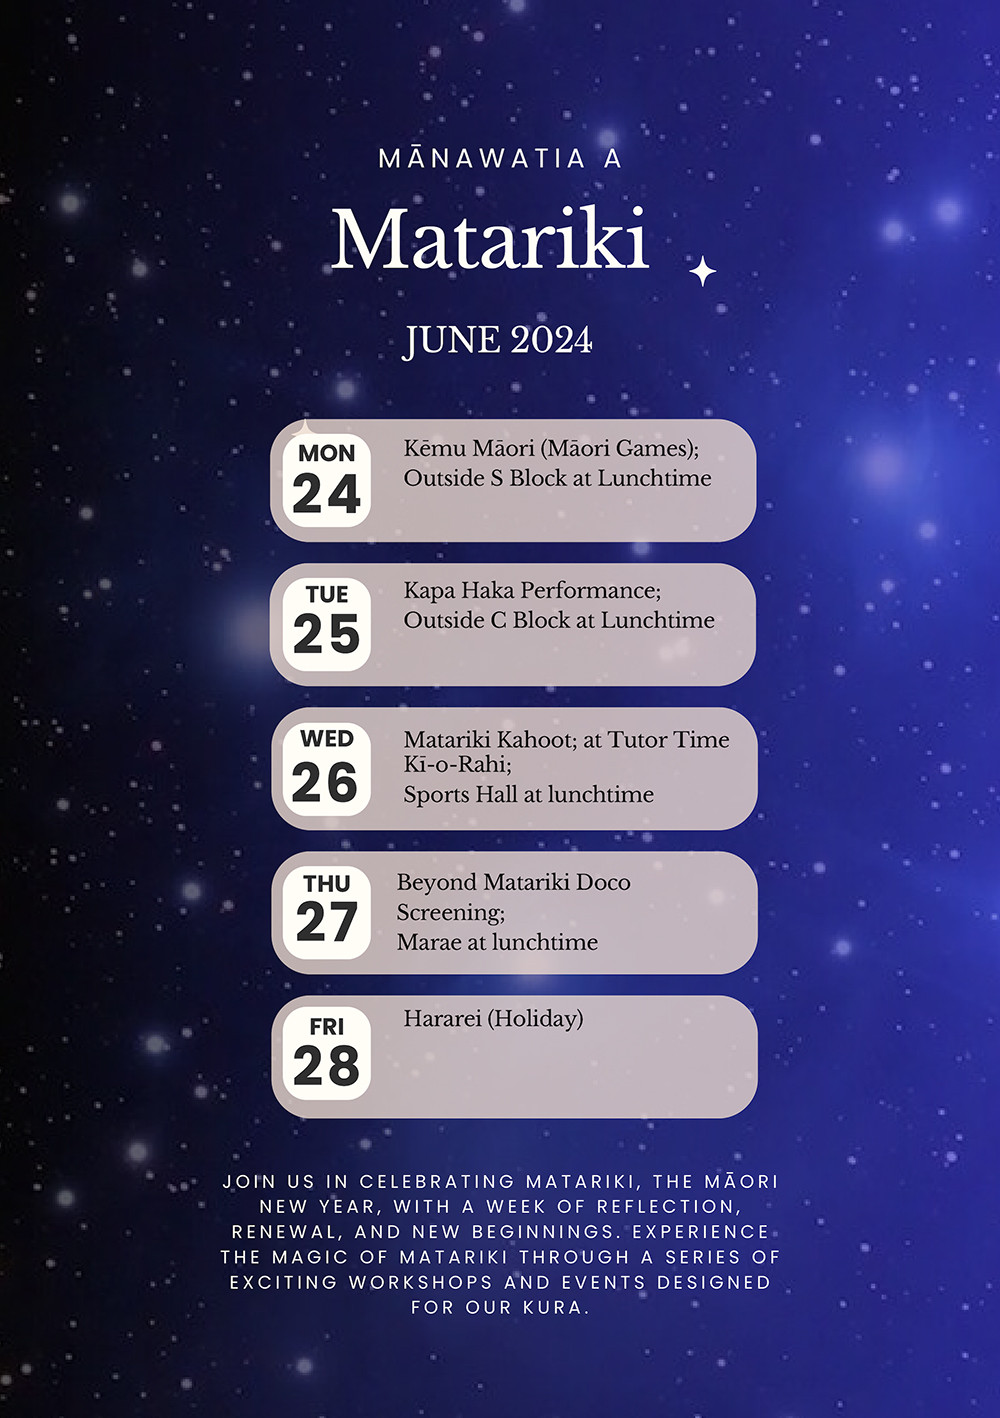 Matariki - the Māori New Year